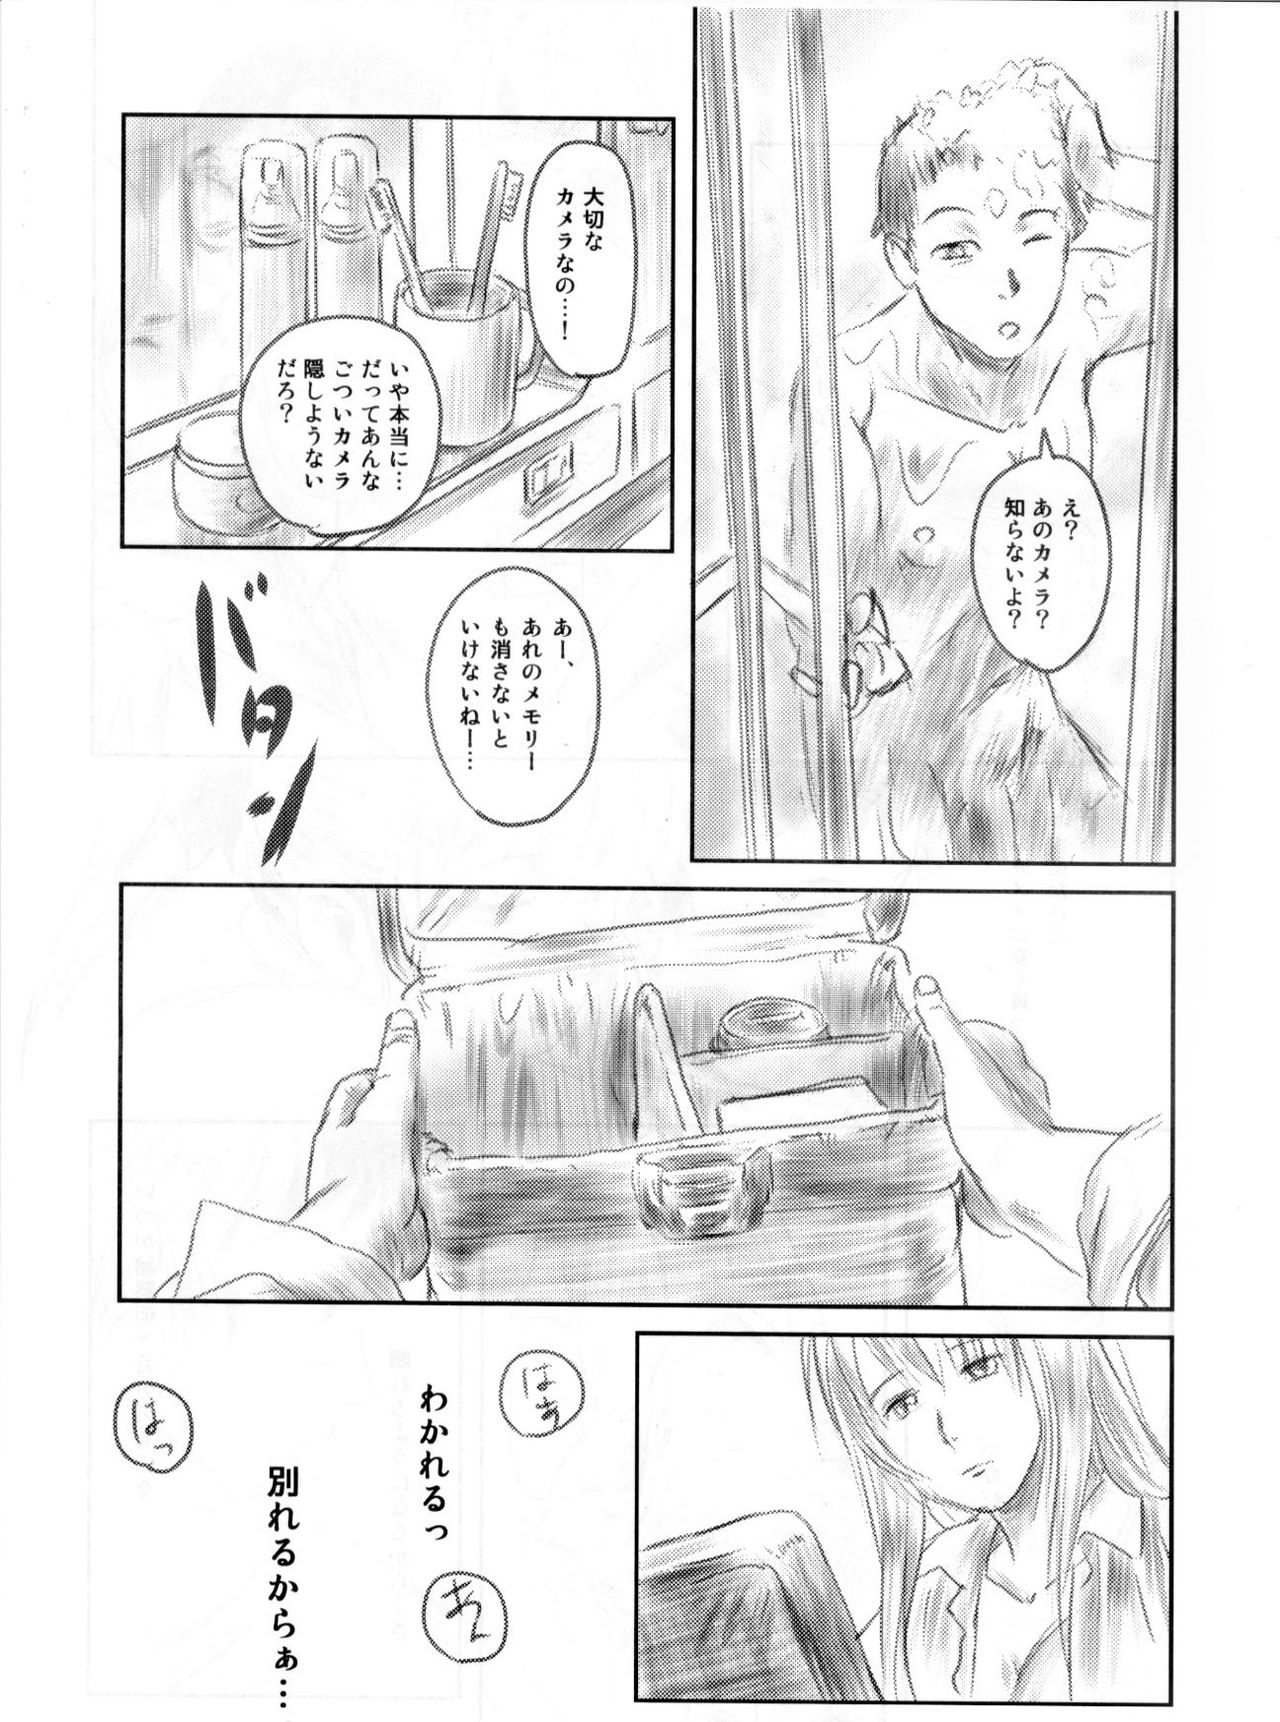 (C82) [MASHIRA-DOU (Mashiraga Aki)] FORK IN THE ROAD 2 (Kanzenban) (C82) [ましら堂 (猿駕アキ)] FORK IN THE ROAD 2 (完全版)